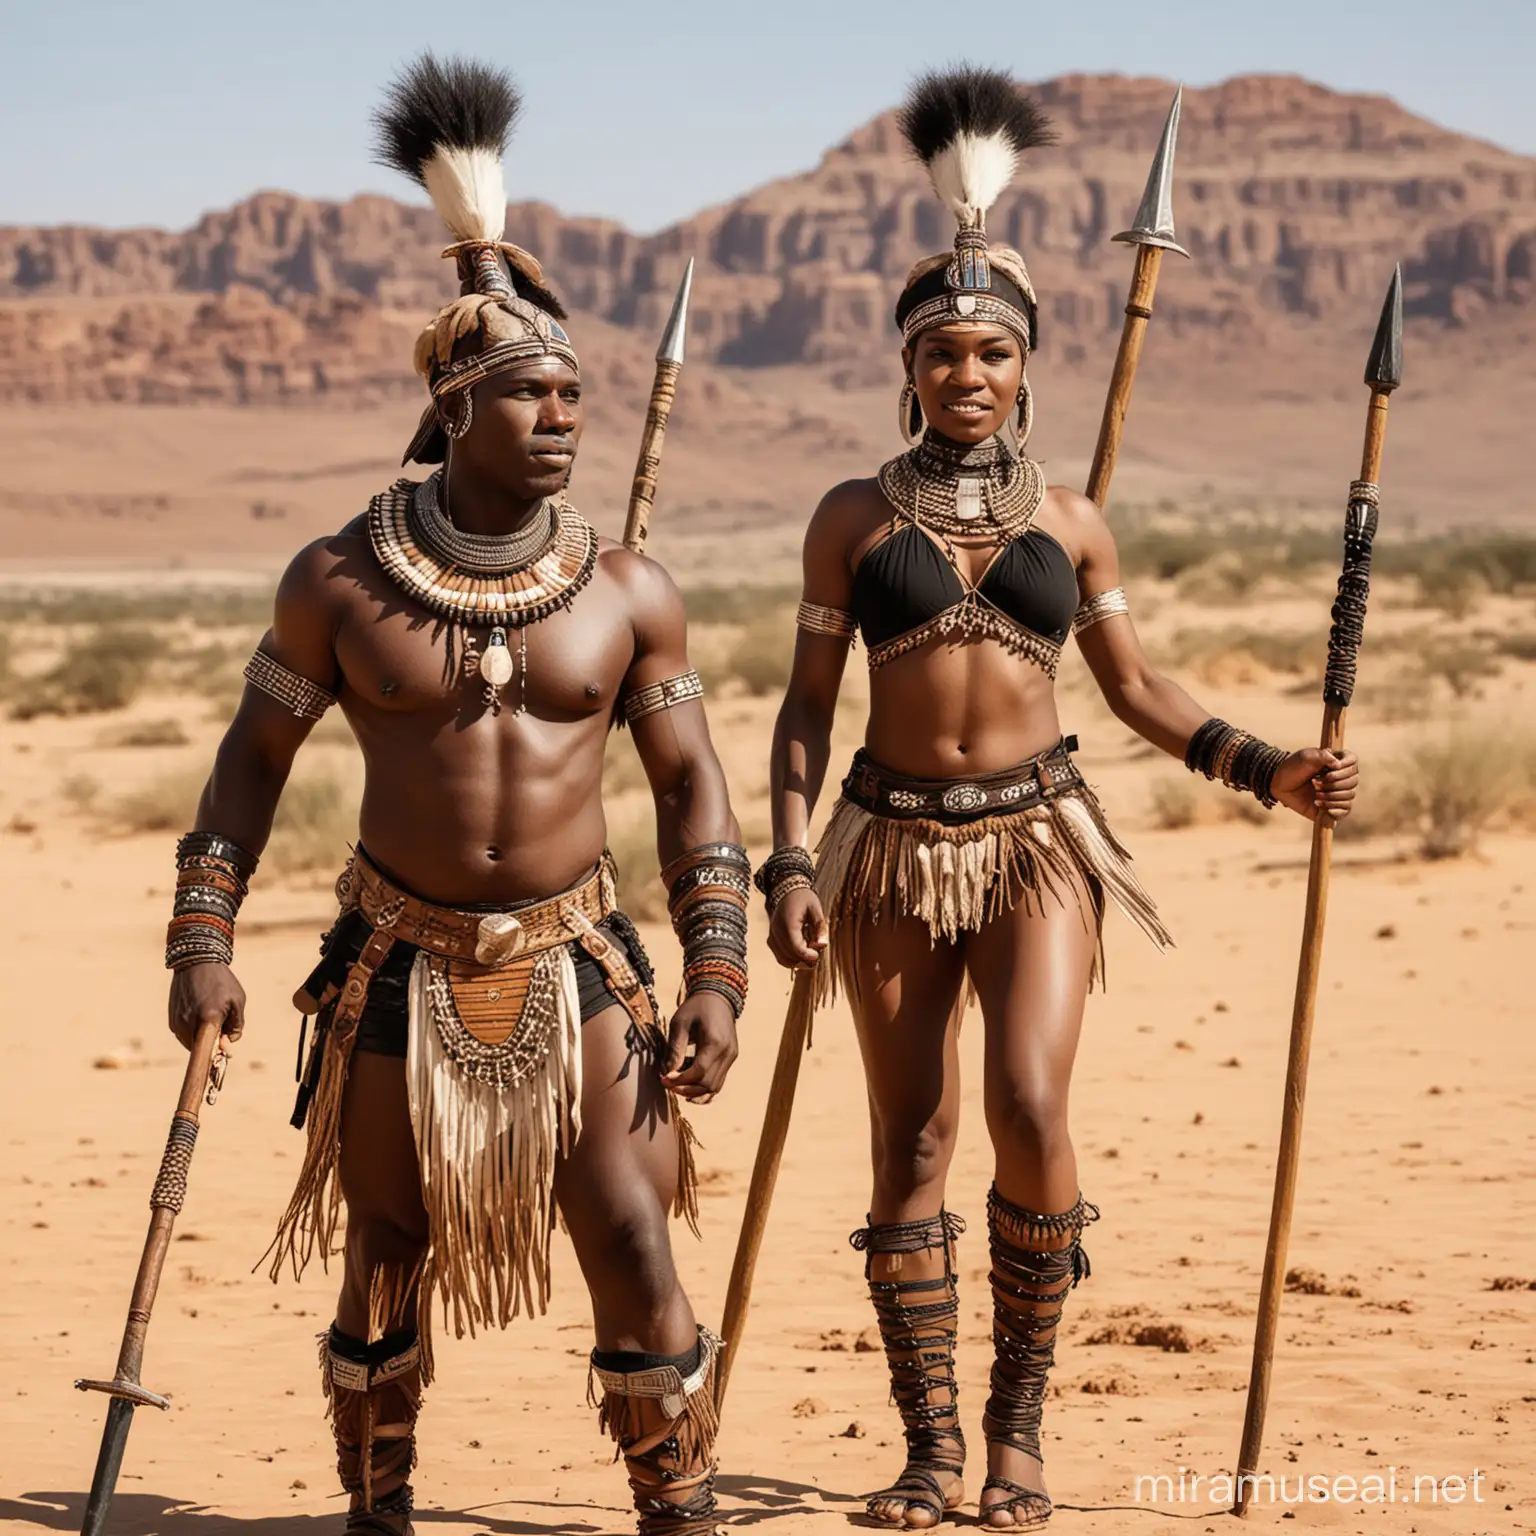 african zulu warriors, male and female, zulu clothes, spears in hand, sahara desert background